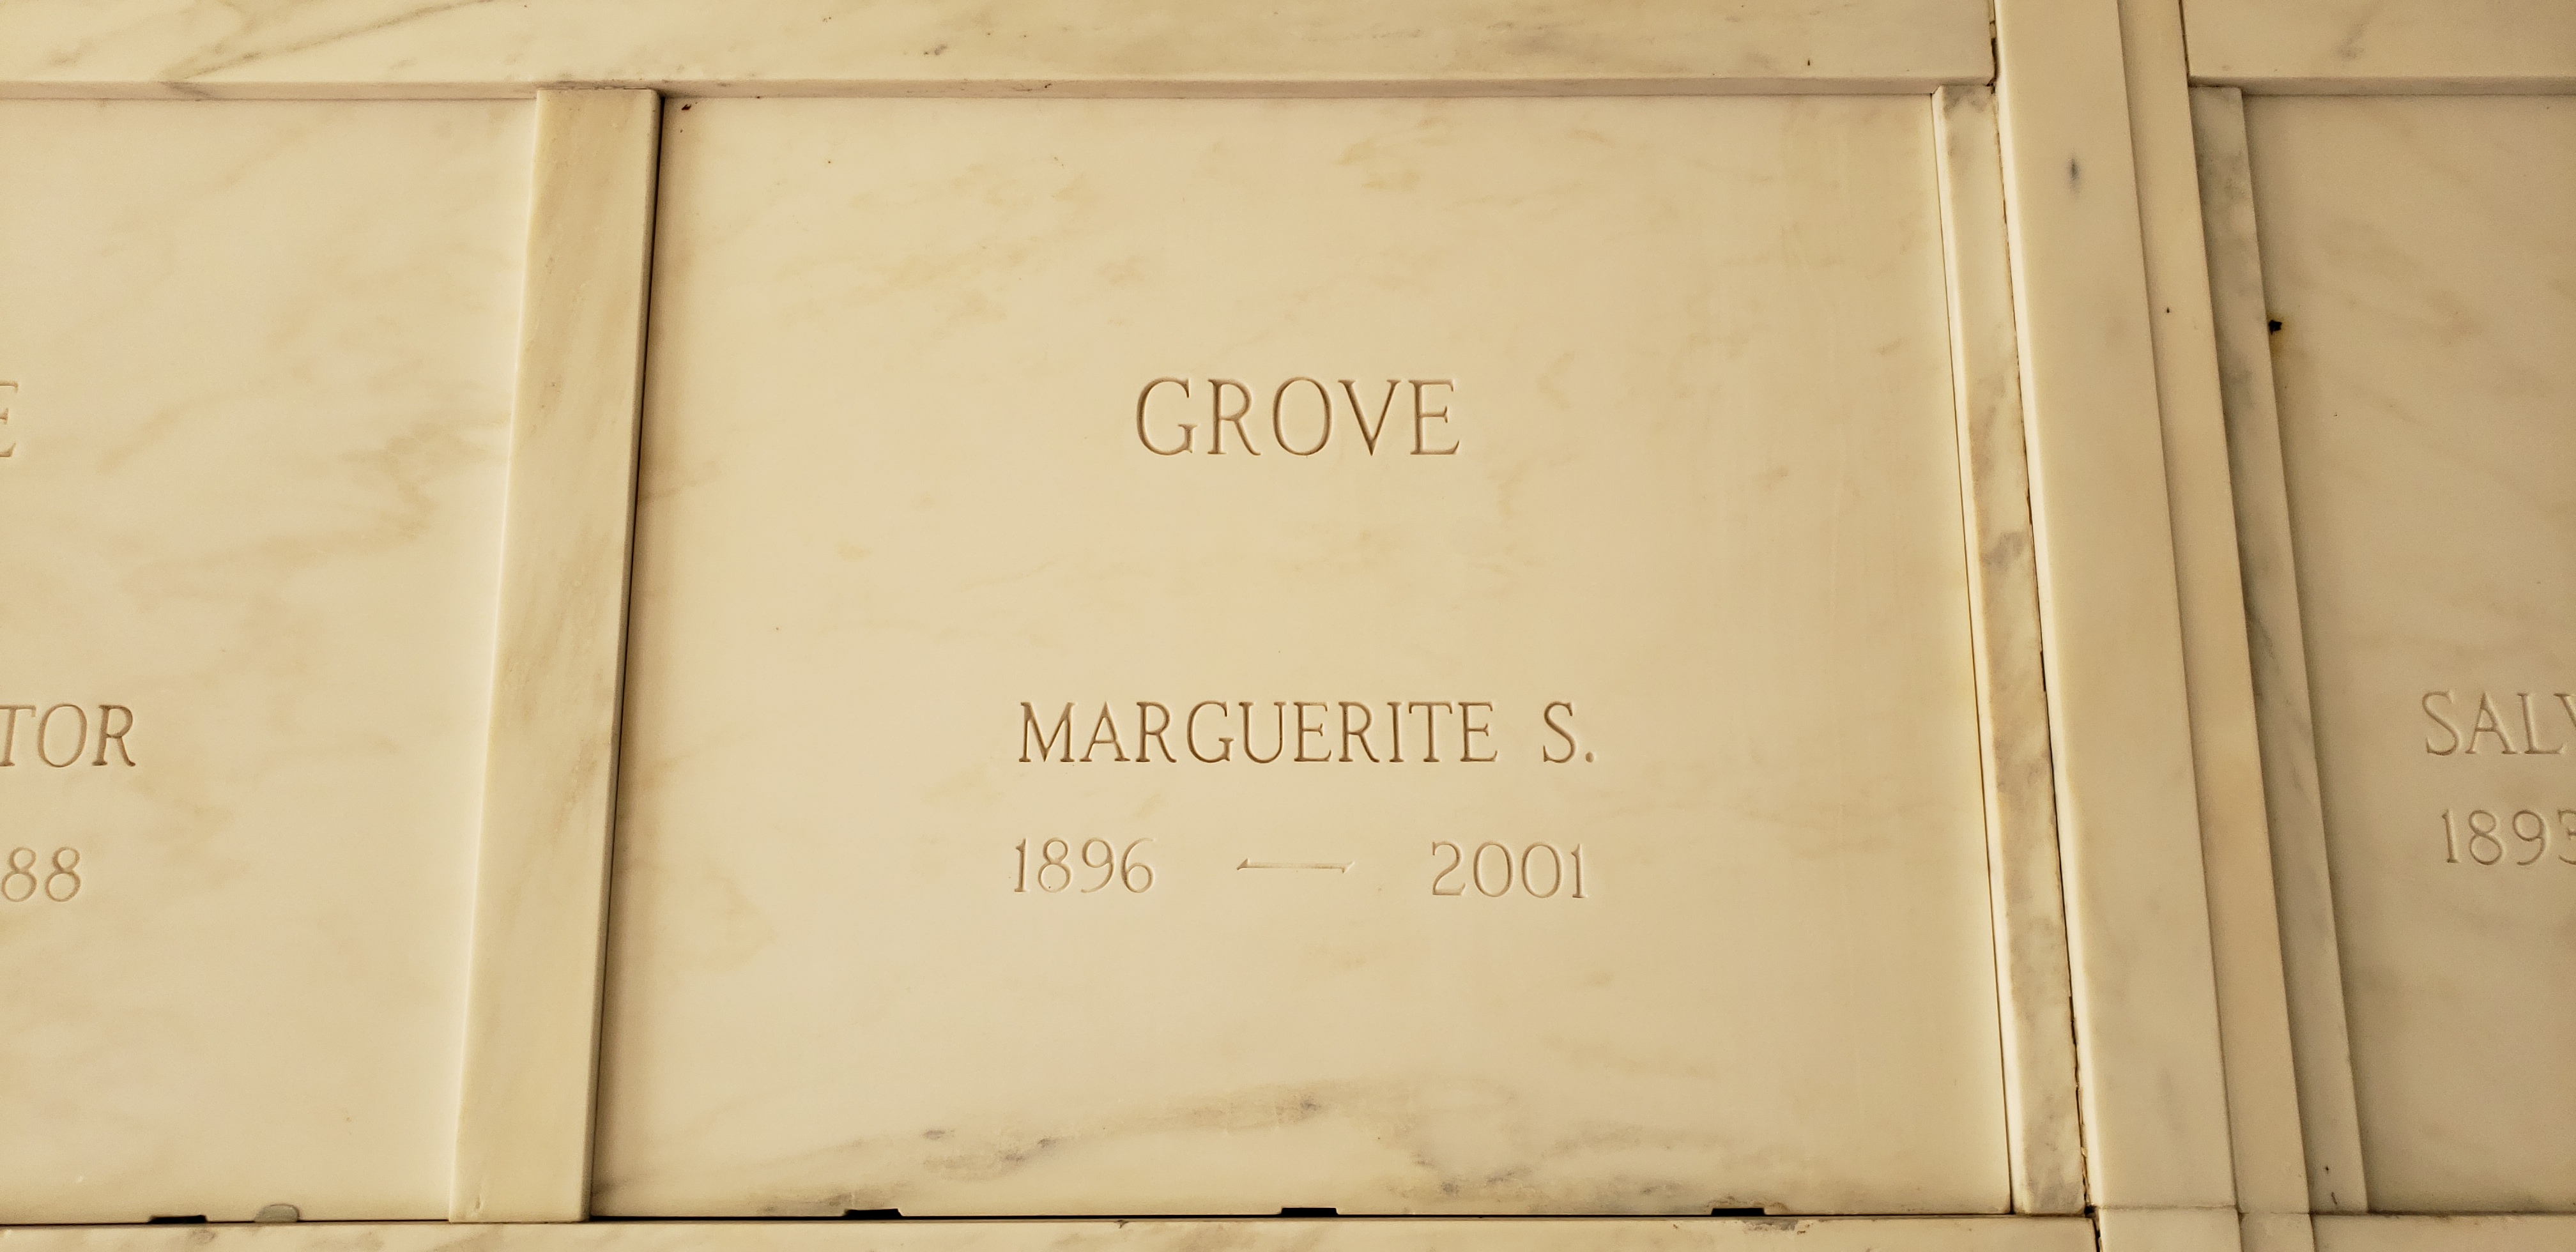 Marguerite S Grove